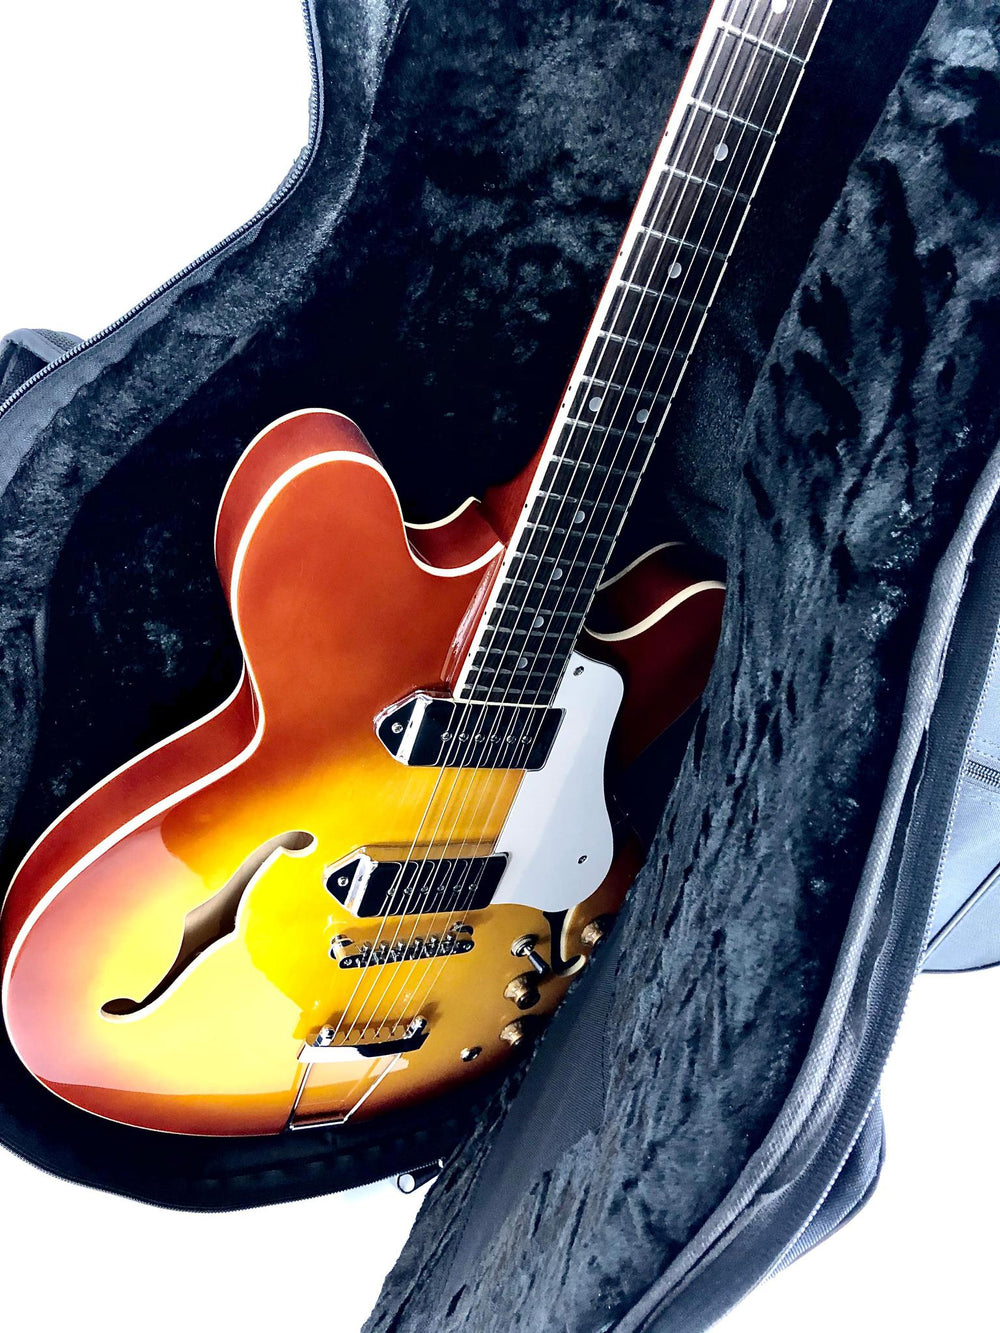 Deluxe Gigbag for Vintage VSA500 Series Guitars by Henry Heller - British Audio